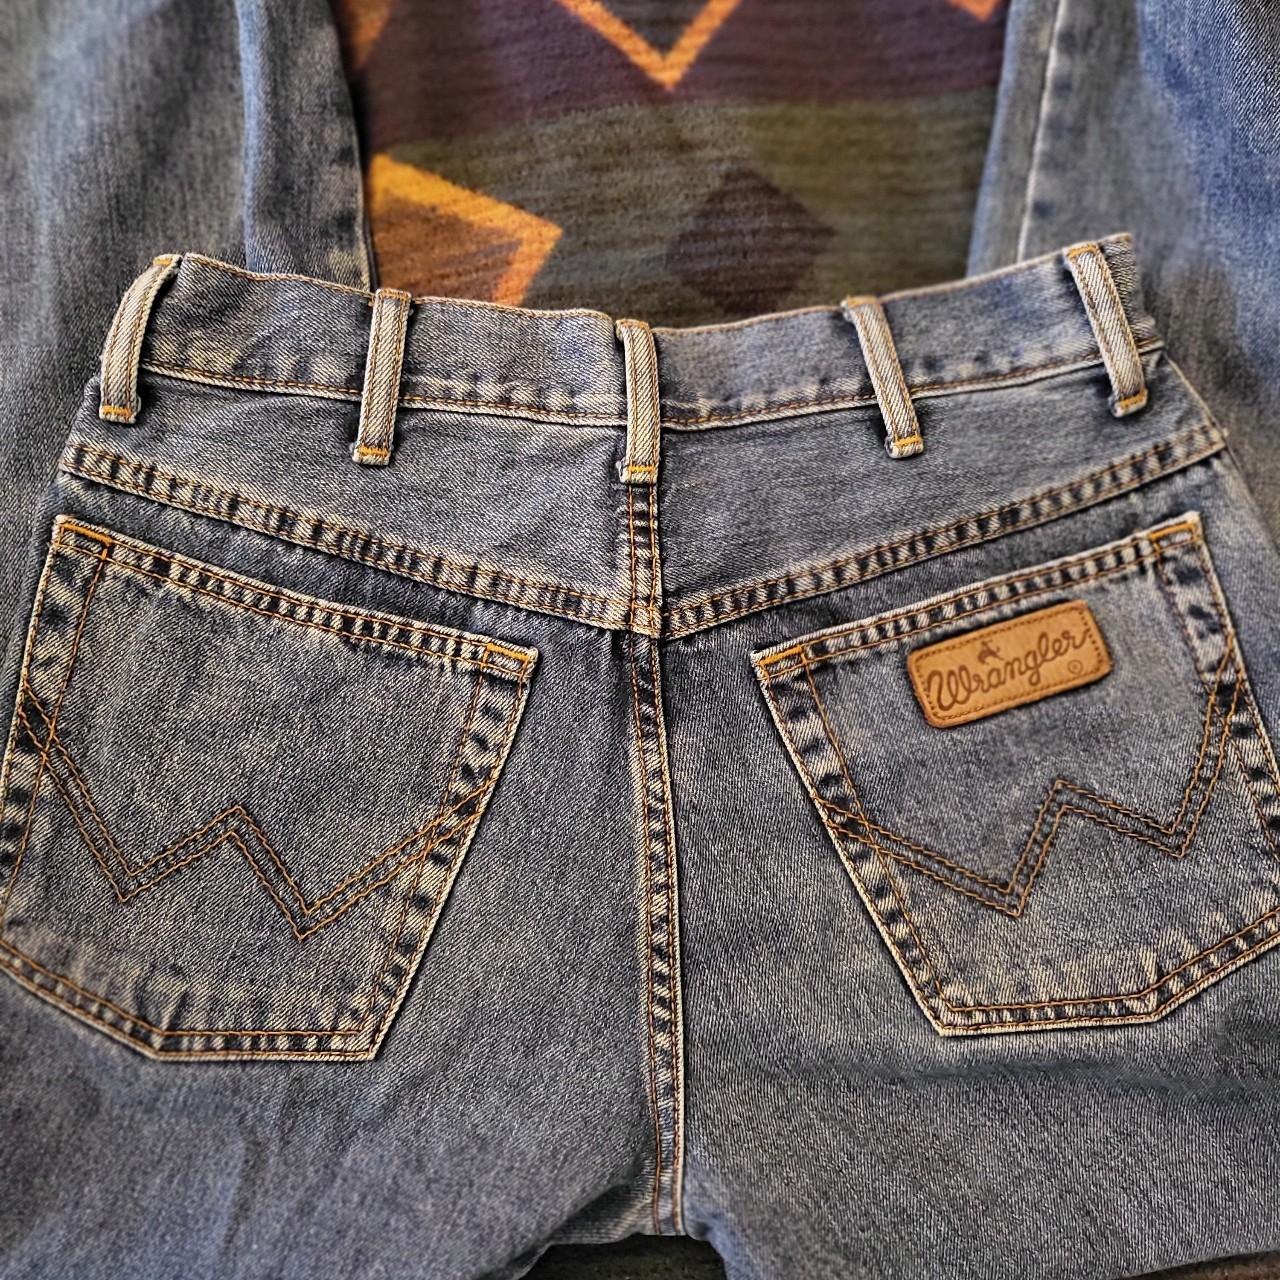 Gorgeous vintage wrangler jeans. Women's fit jeans - Depop  Vintage wrangler  jeans, Wrangler jeans, Wrangler jeans women's